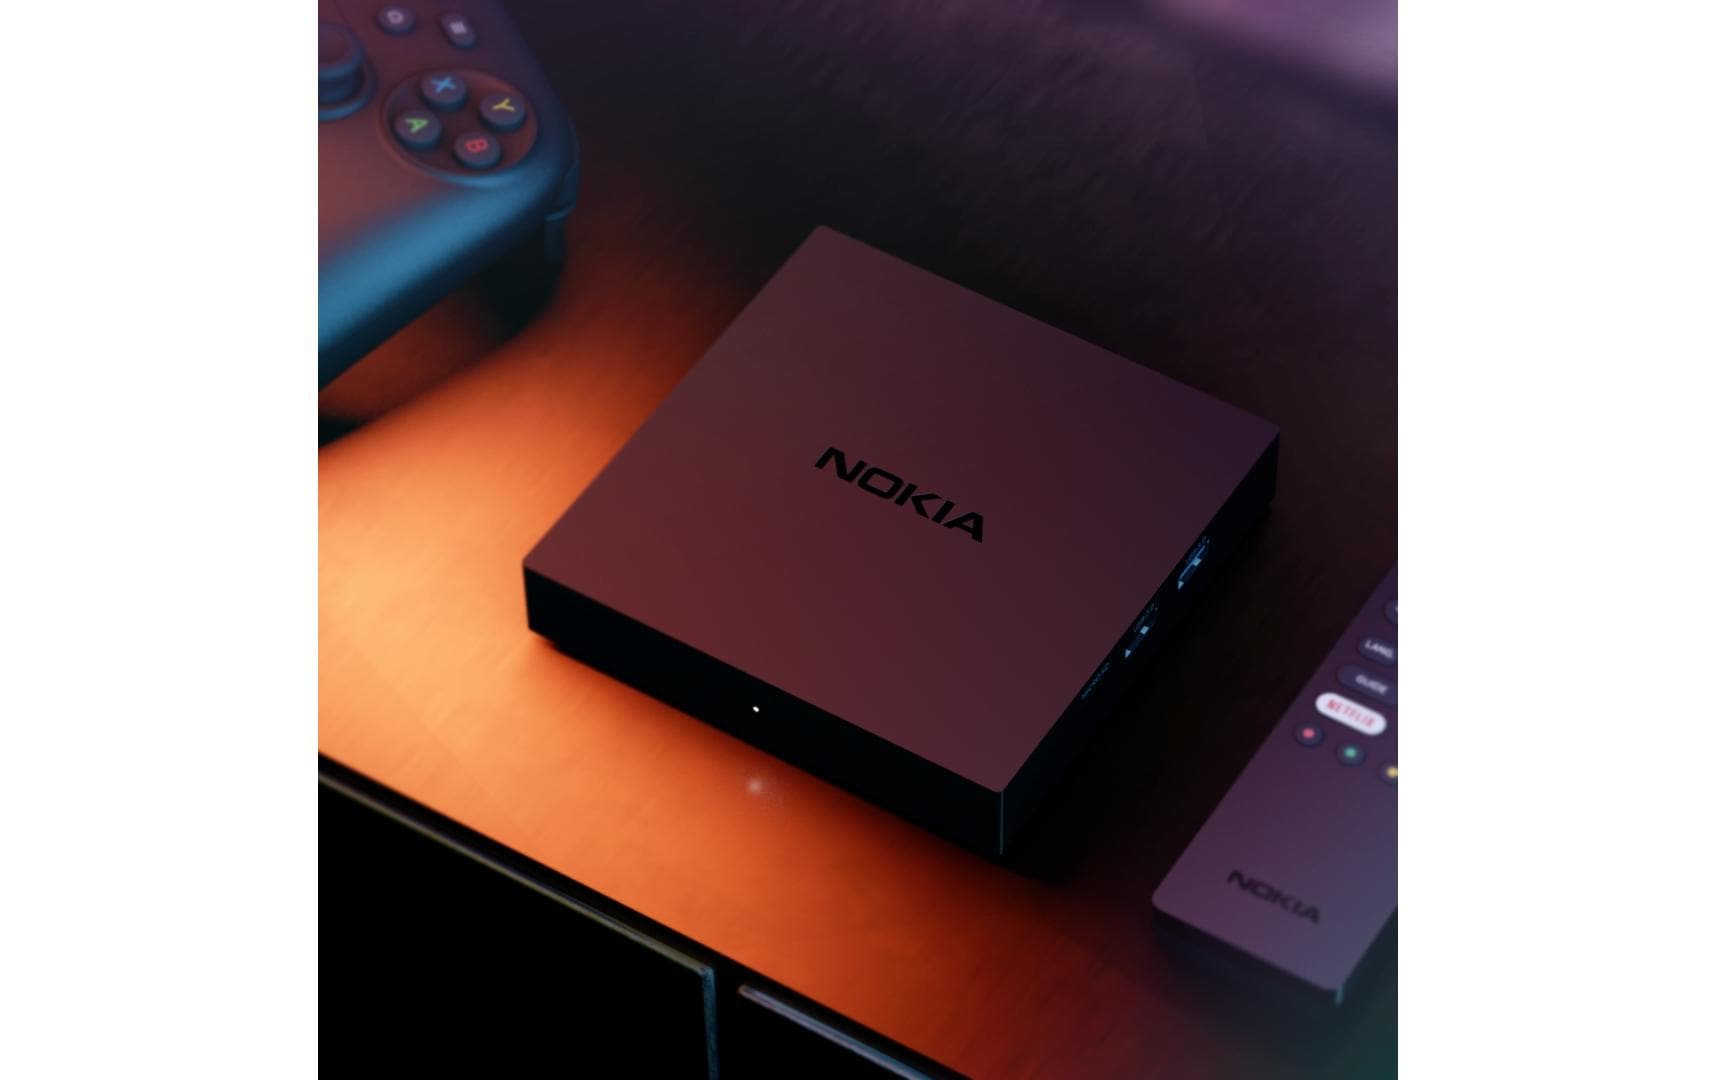 Nokia Mediaplayer Streaming Box 8010